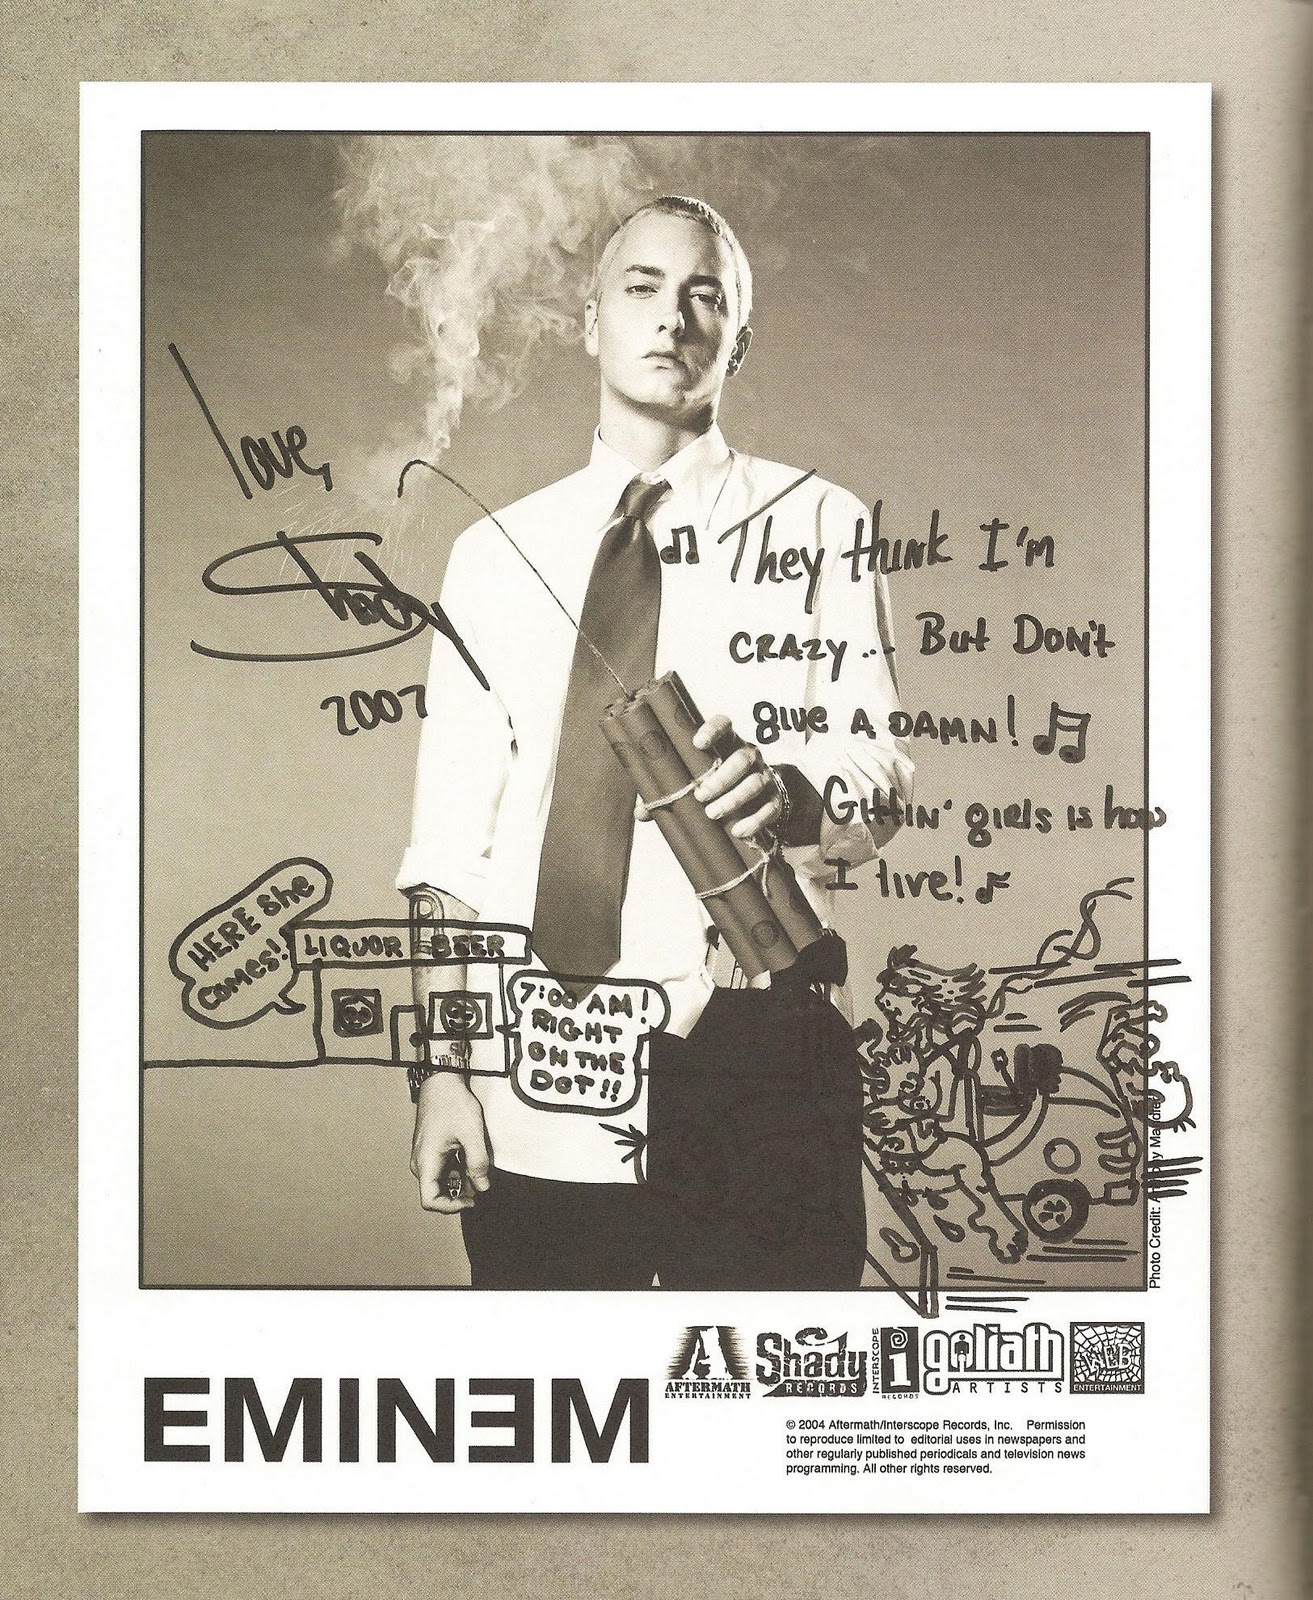 I am книга. Эминем книга. Романы Эминема. Eminem the way i am книга. Книга Эминема купить.